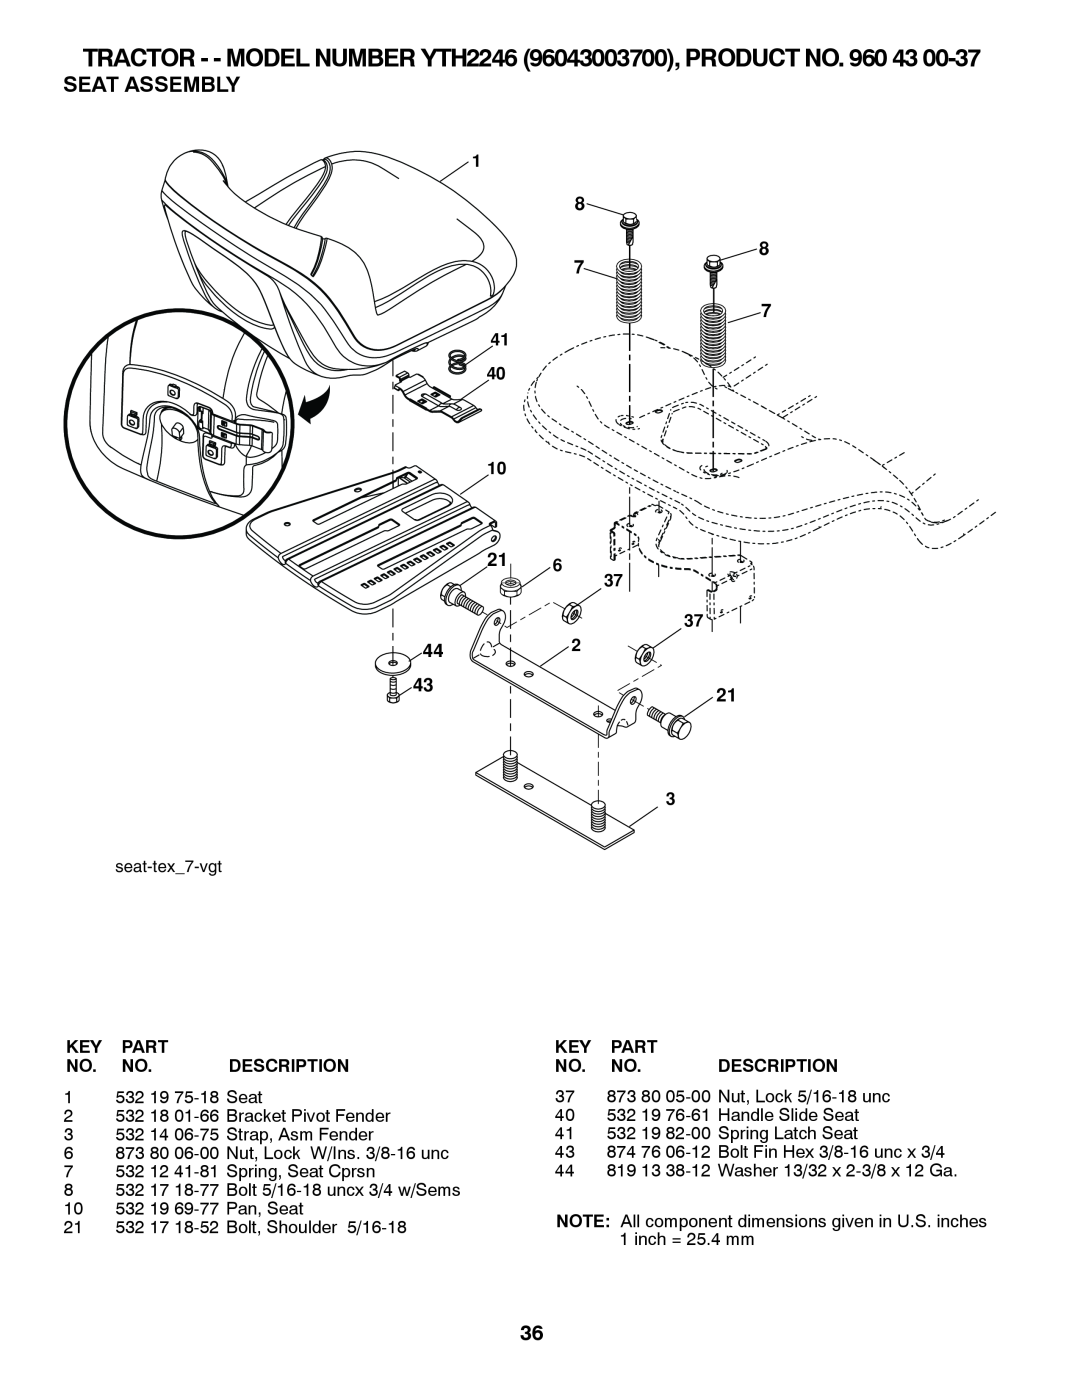 Husqvarna Seat Assembly, TRACTOR - - MODEL NUMBER YTH2246 96043003700, PRODUCT NO, Key Part No. No. Description 